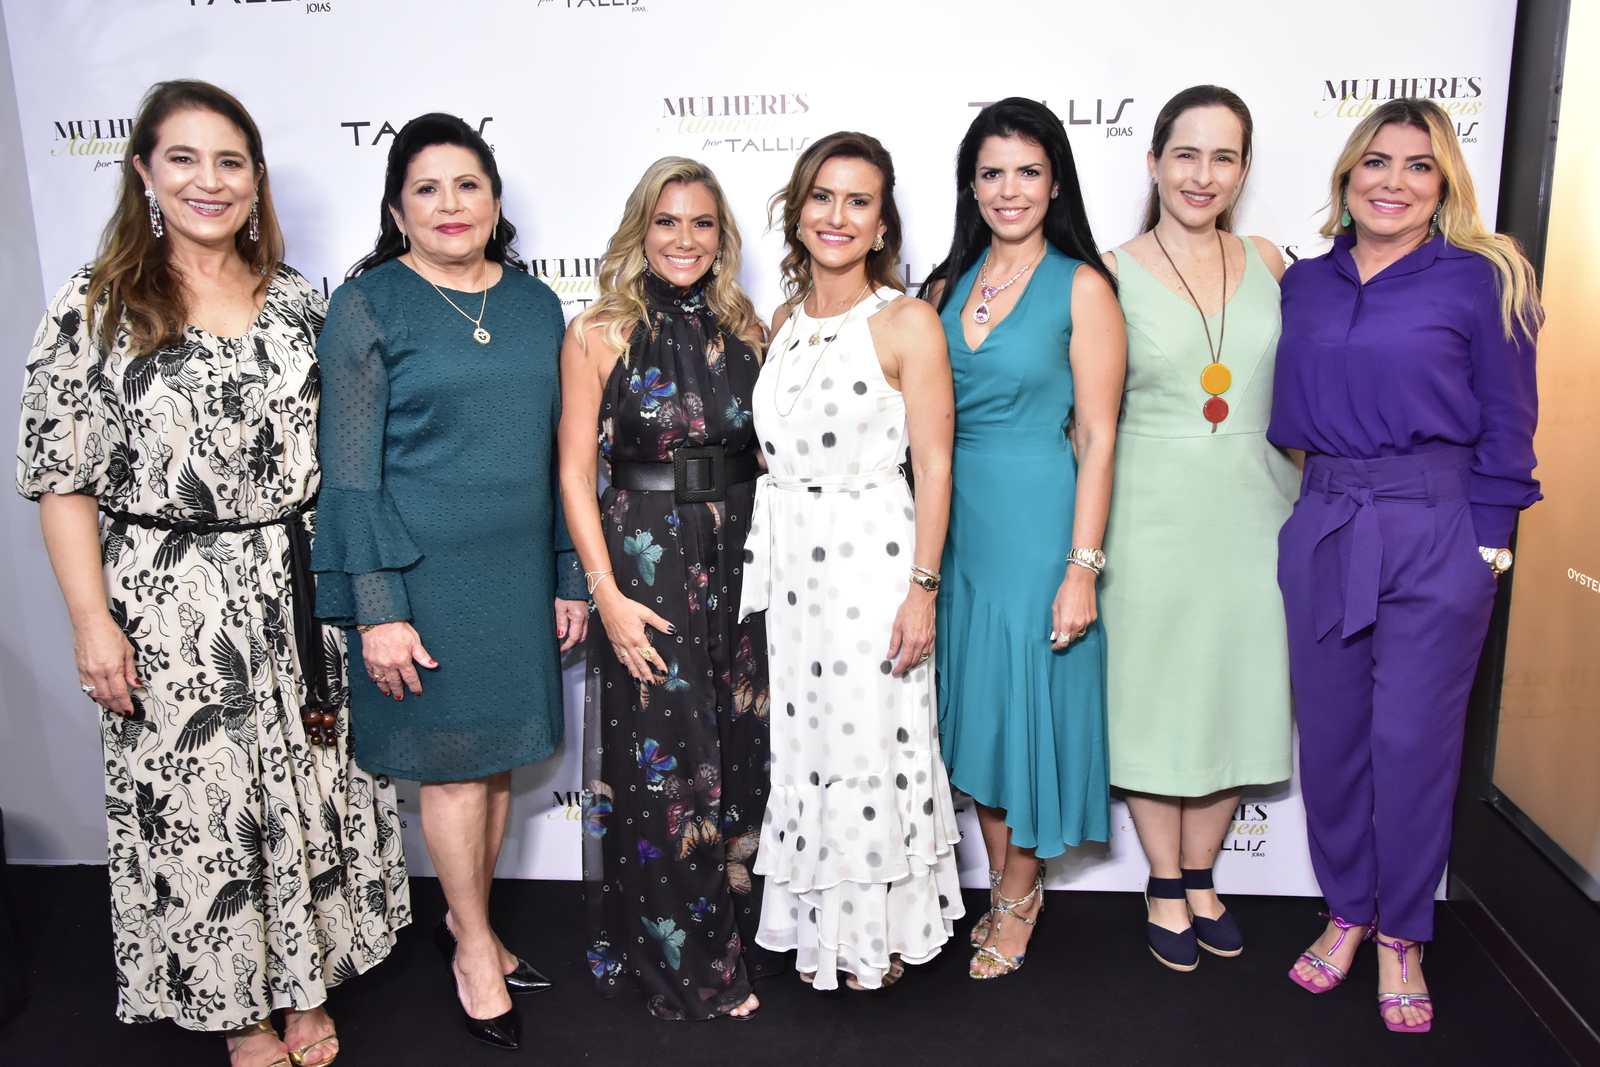 Tallis Joias celebra Mulheres Admiráveis em evento no Iguatemi